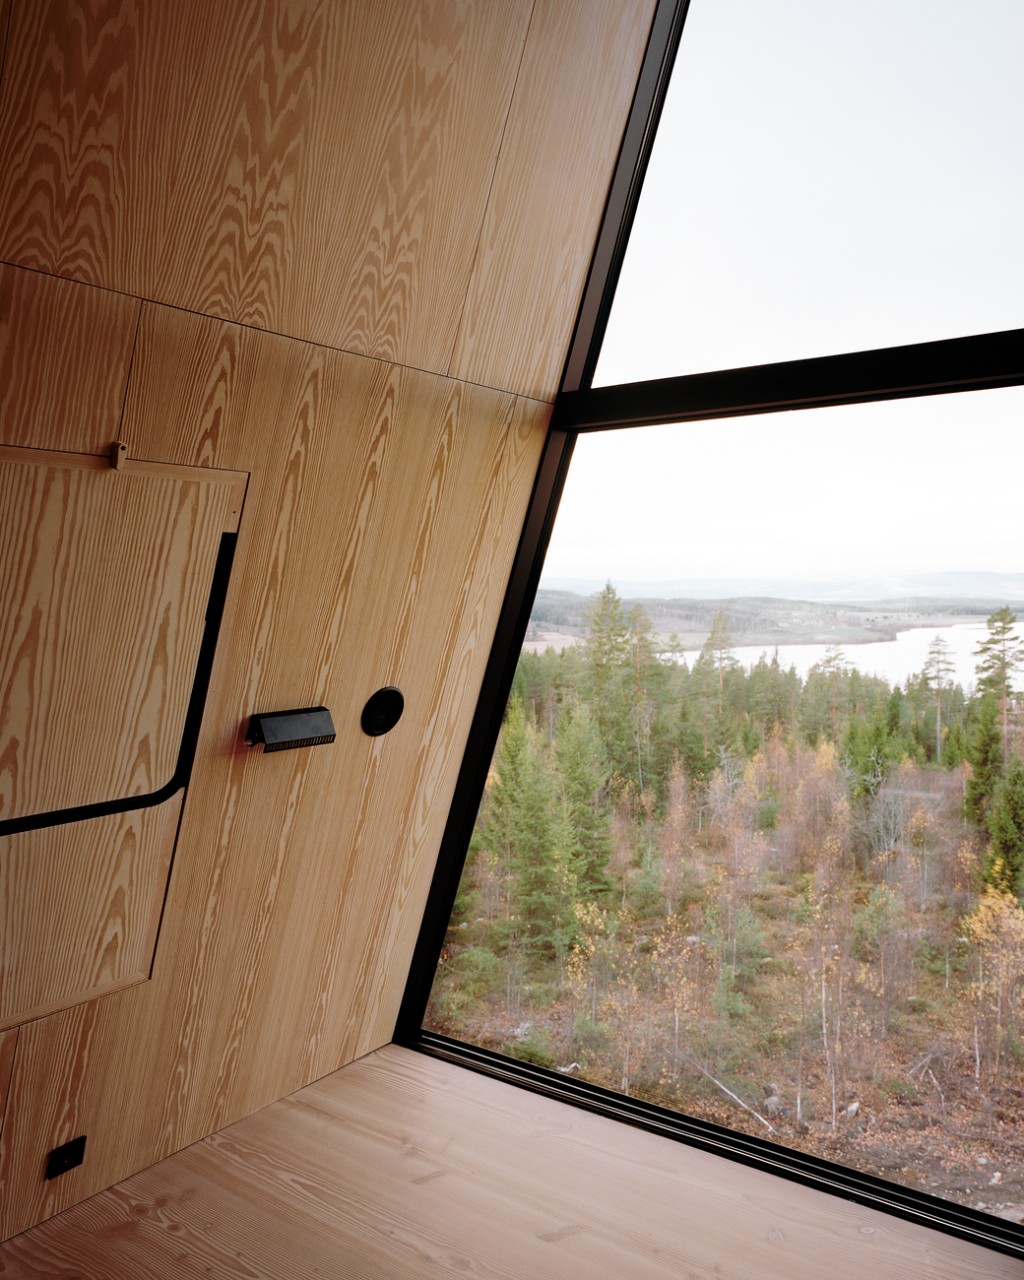 Espen Surnevik, Pan Treetop Cabins, Finnskogen, Norvway, 2019